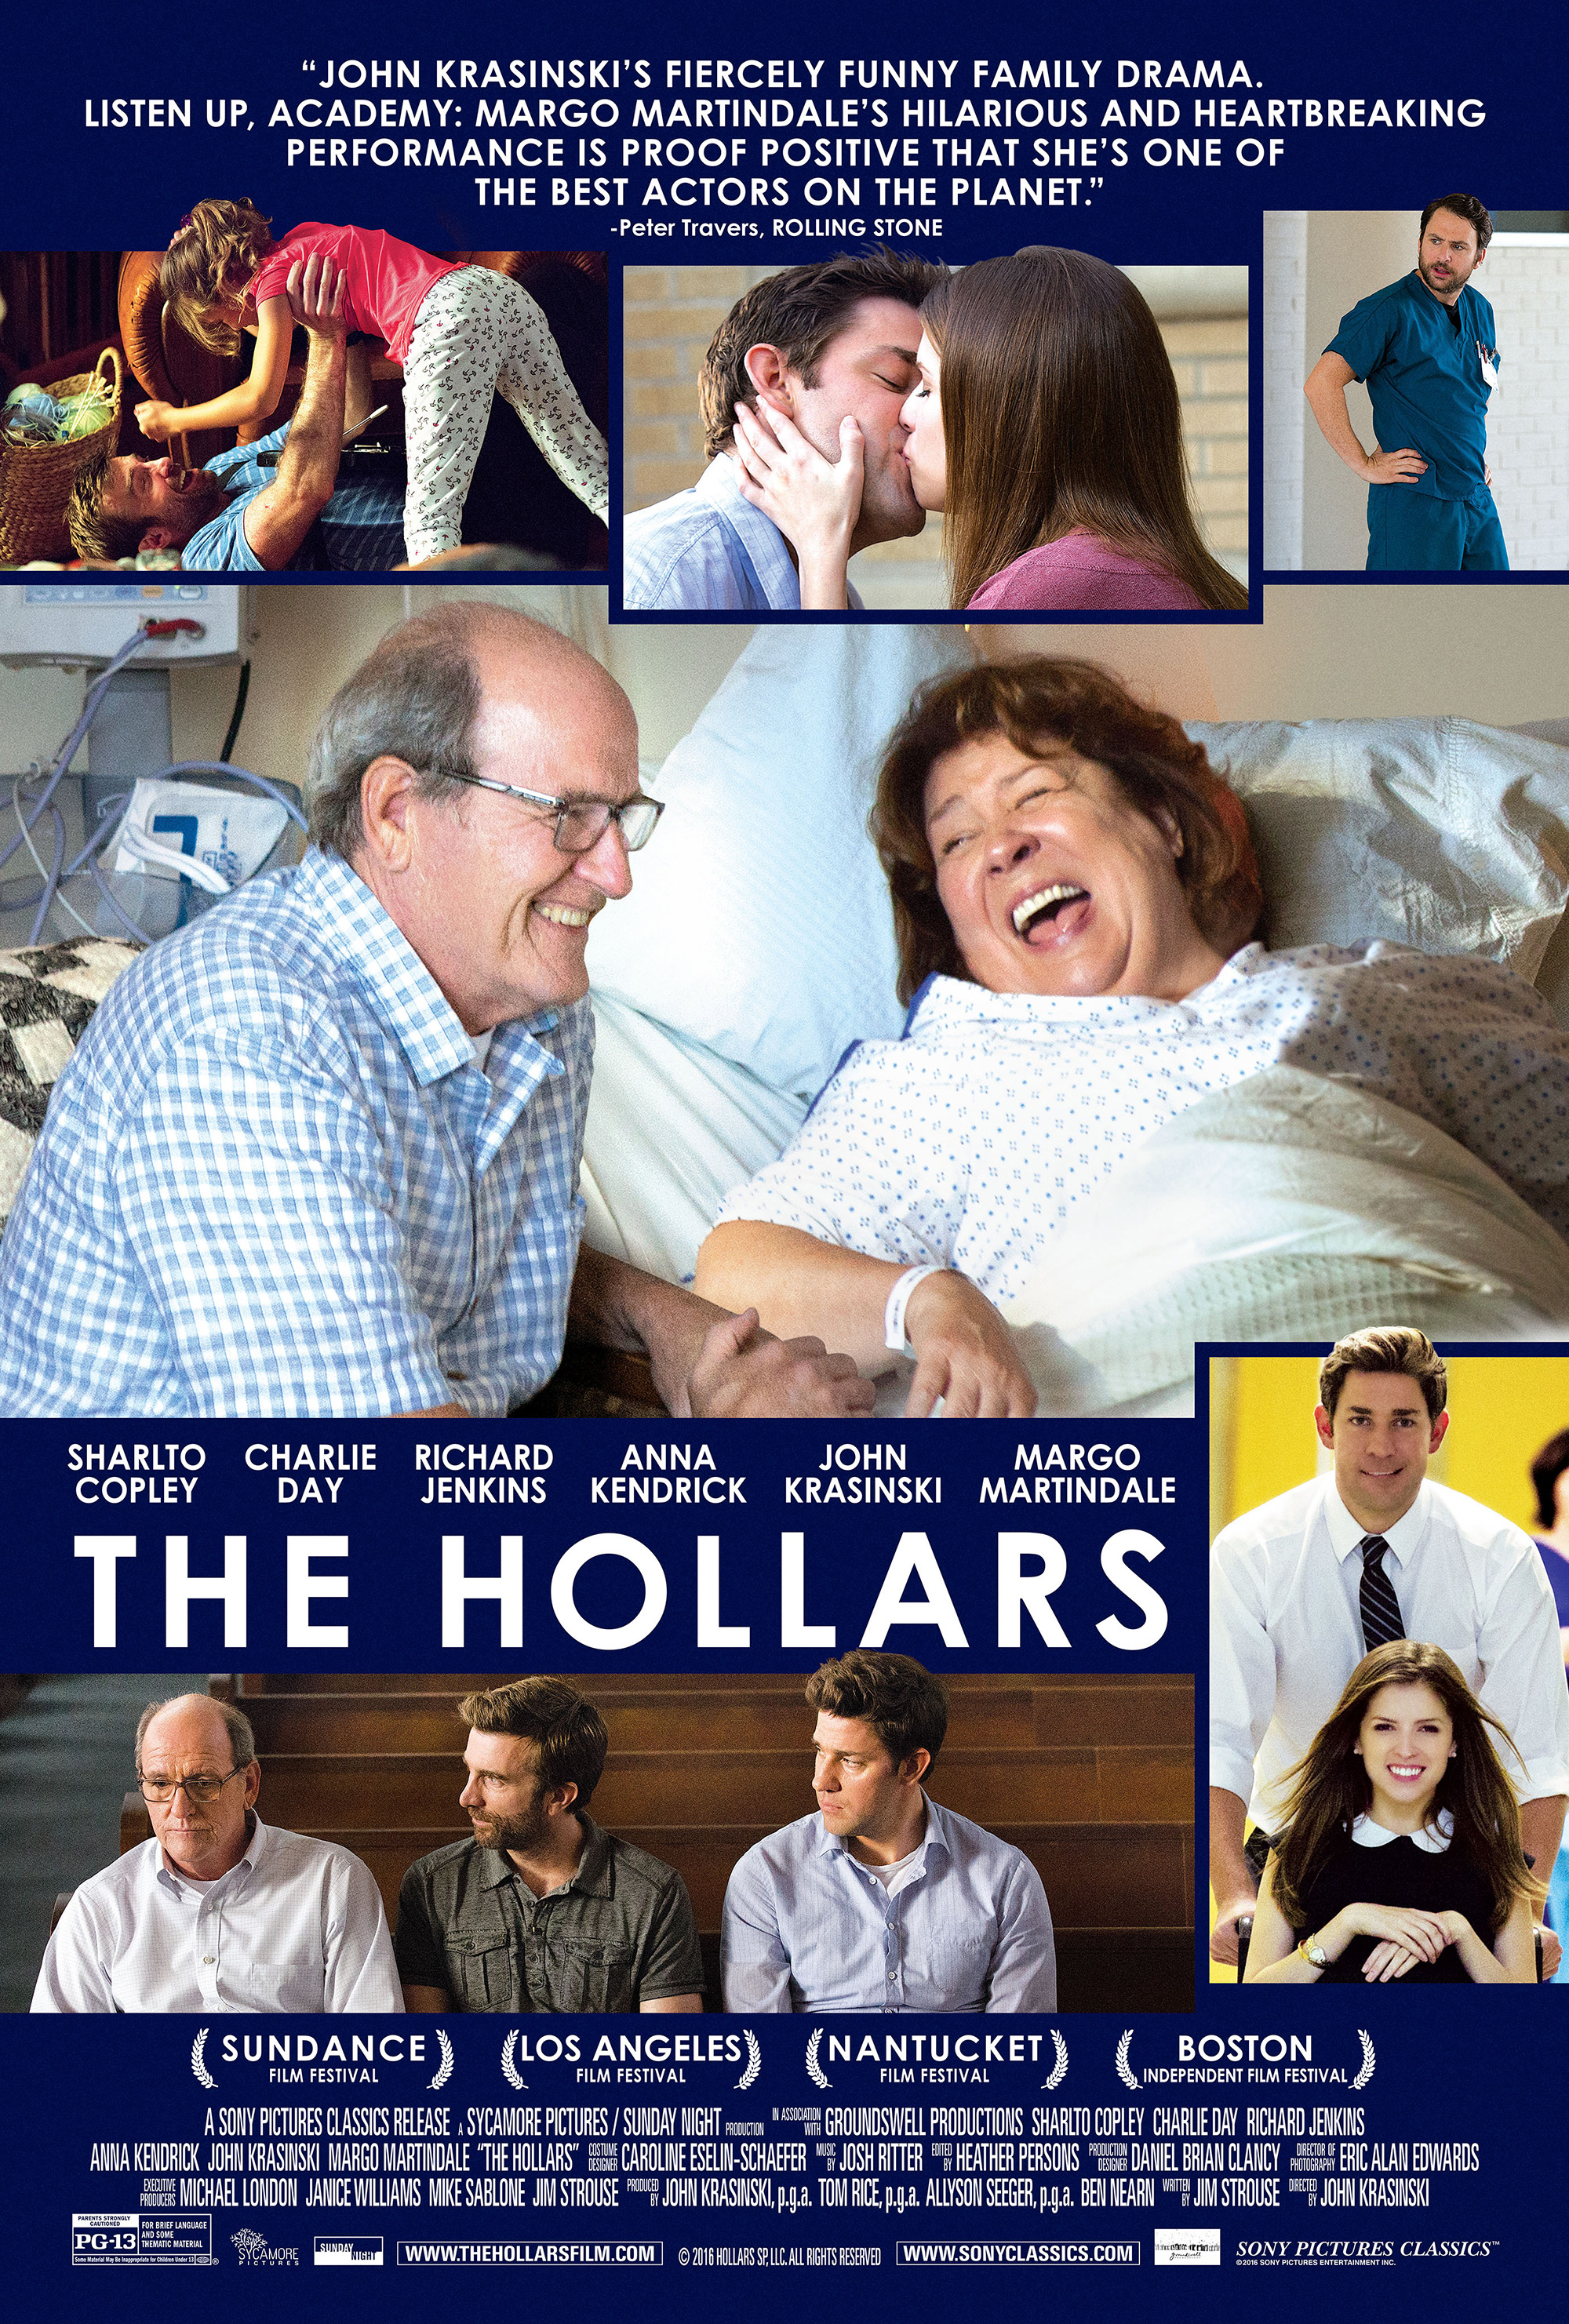 Friday Night at the Movies – The Hollars